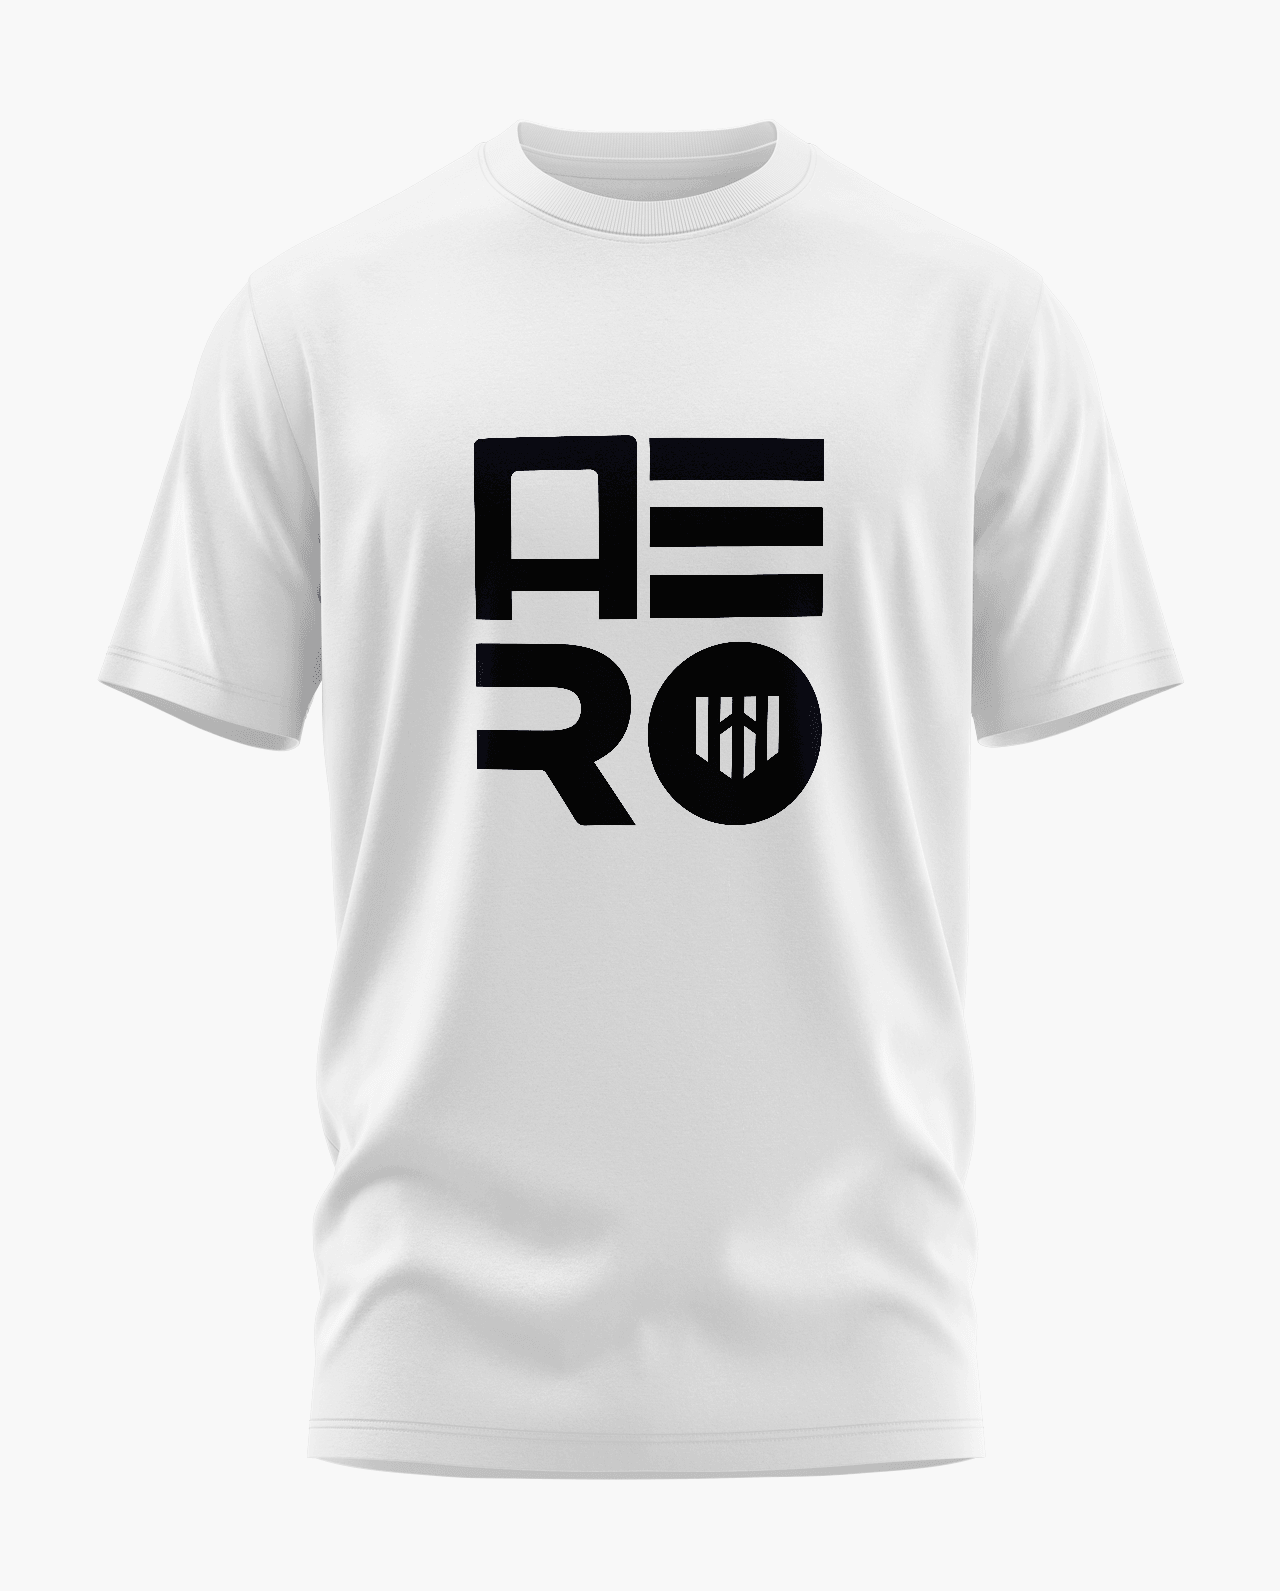 AERO T-Shirt - Aero Armour